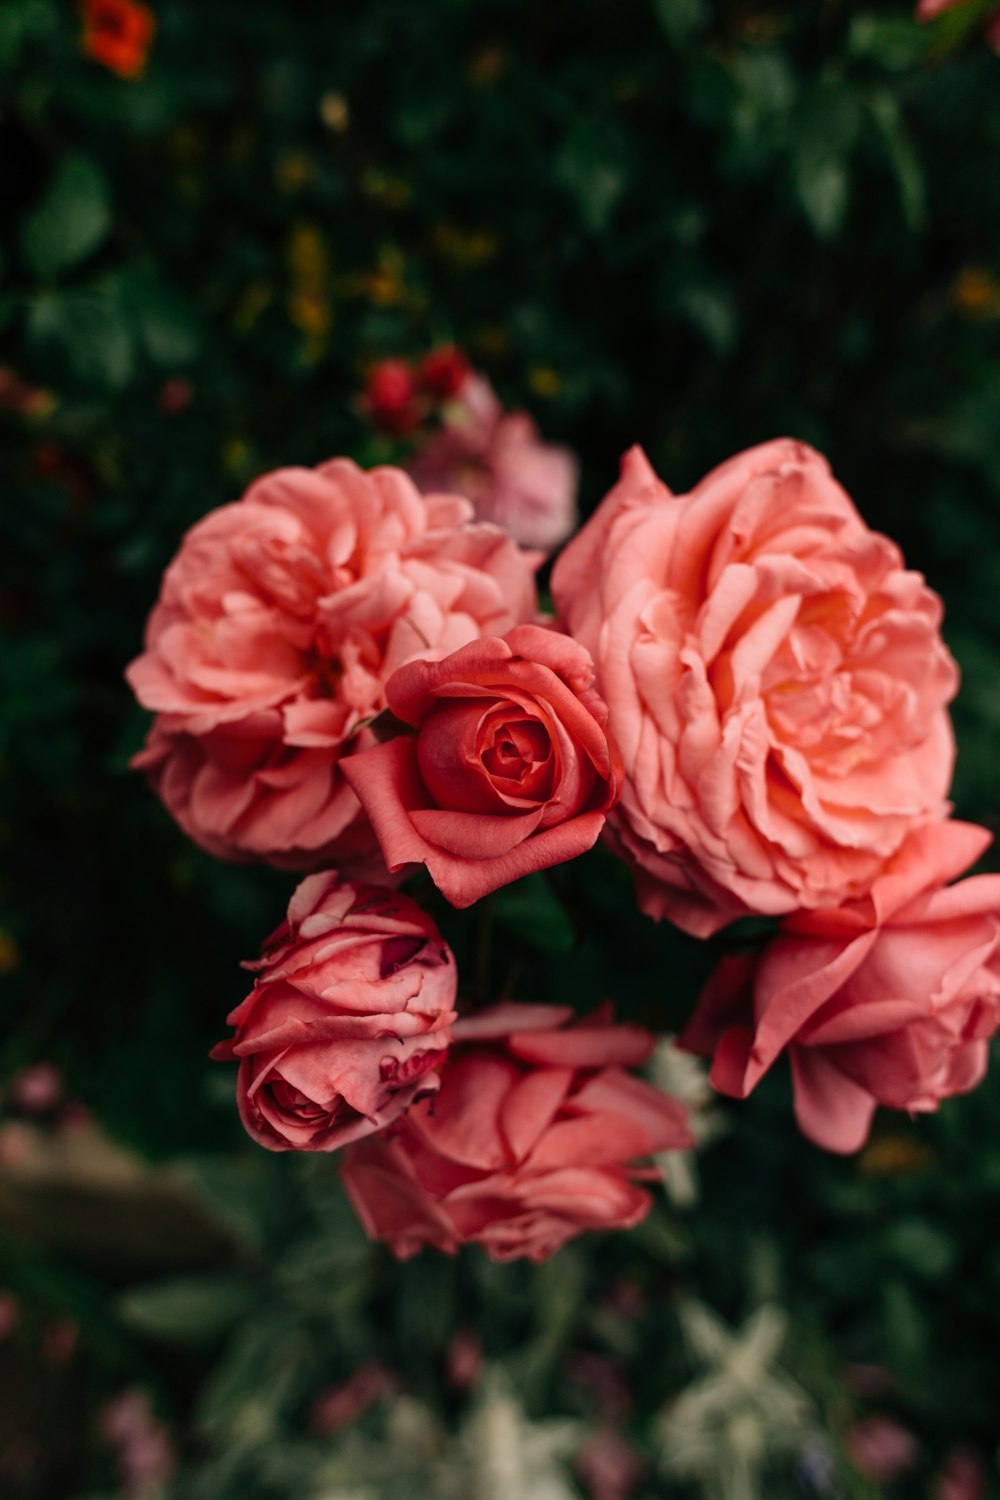 fotografia ravvicinata di rosa rosa